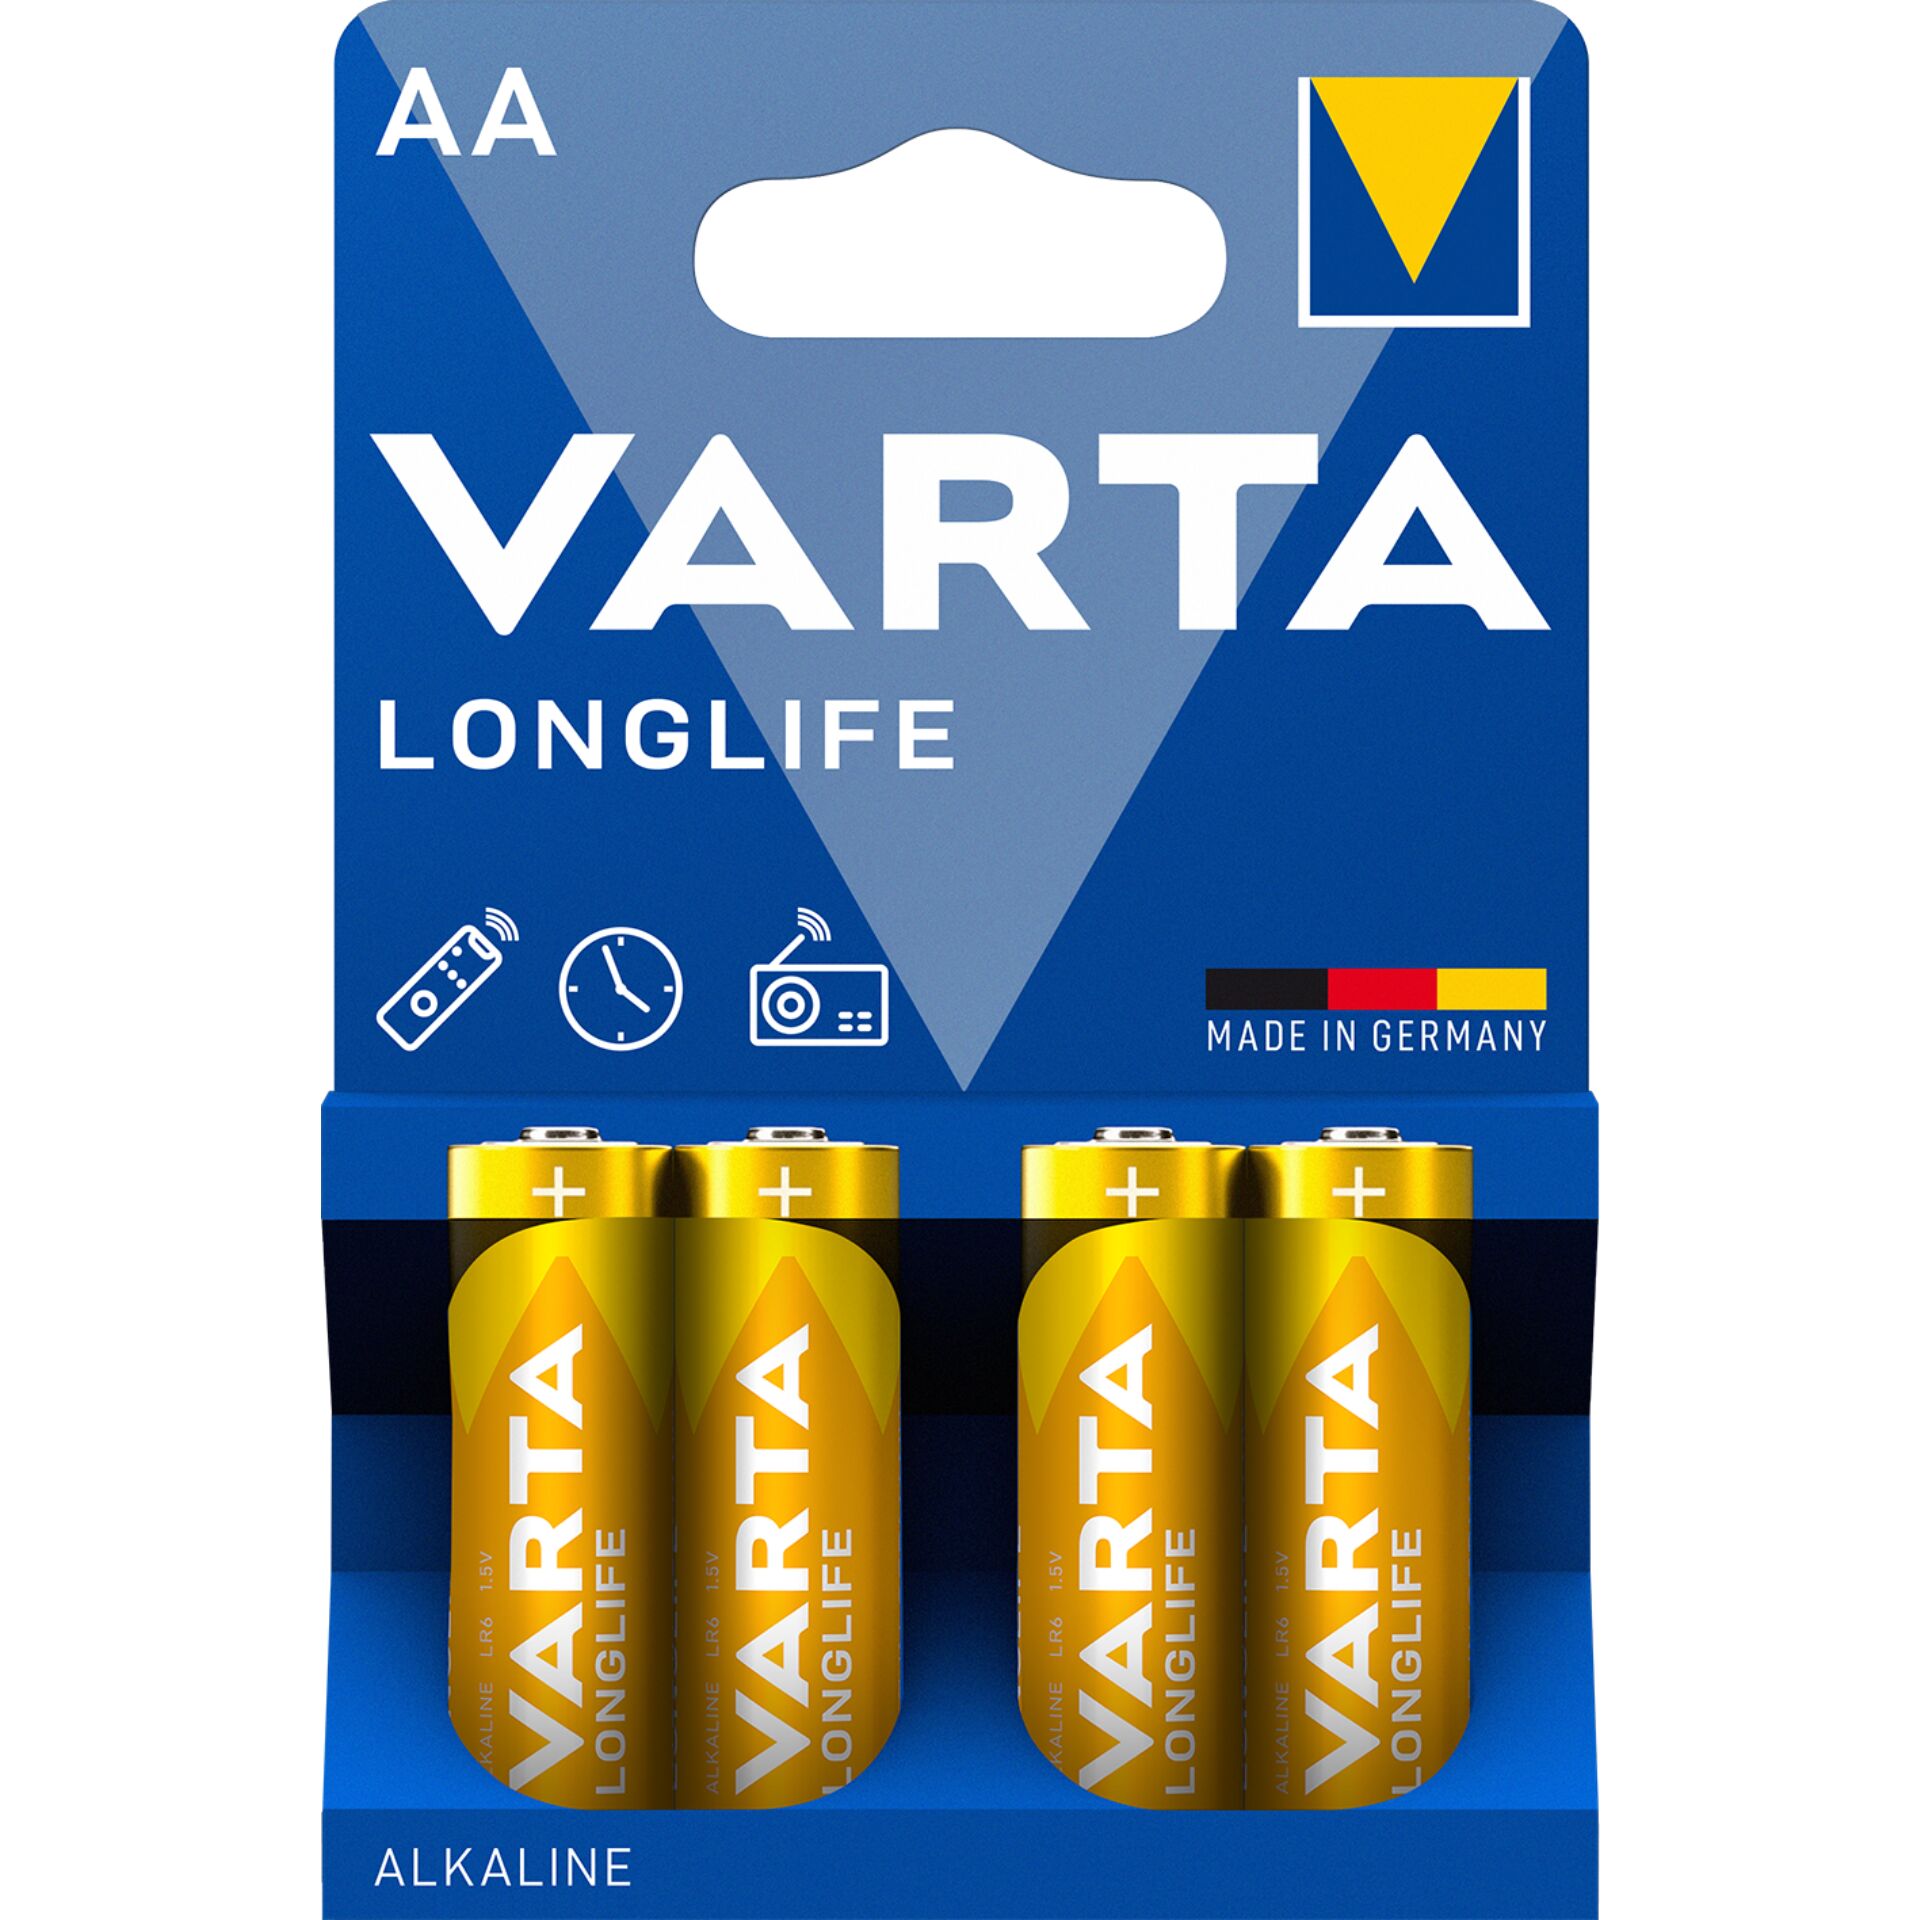 VARTA - Low Cost Energy